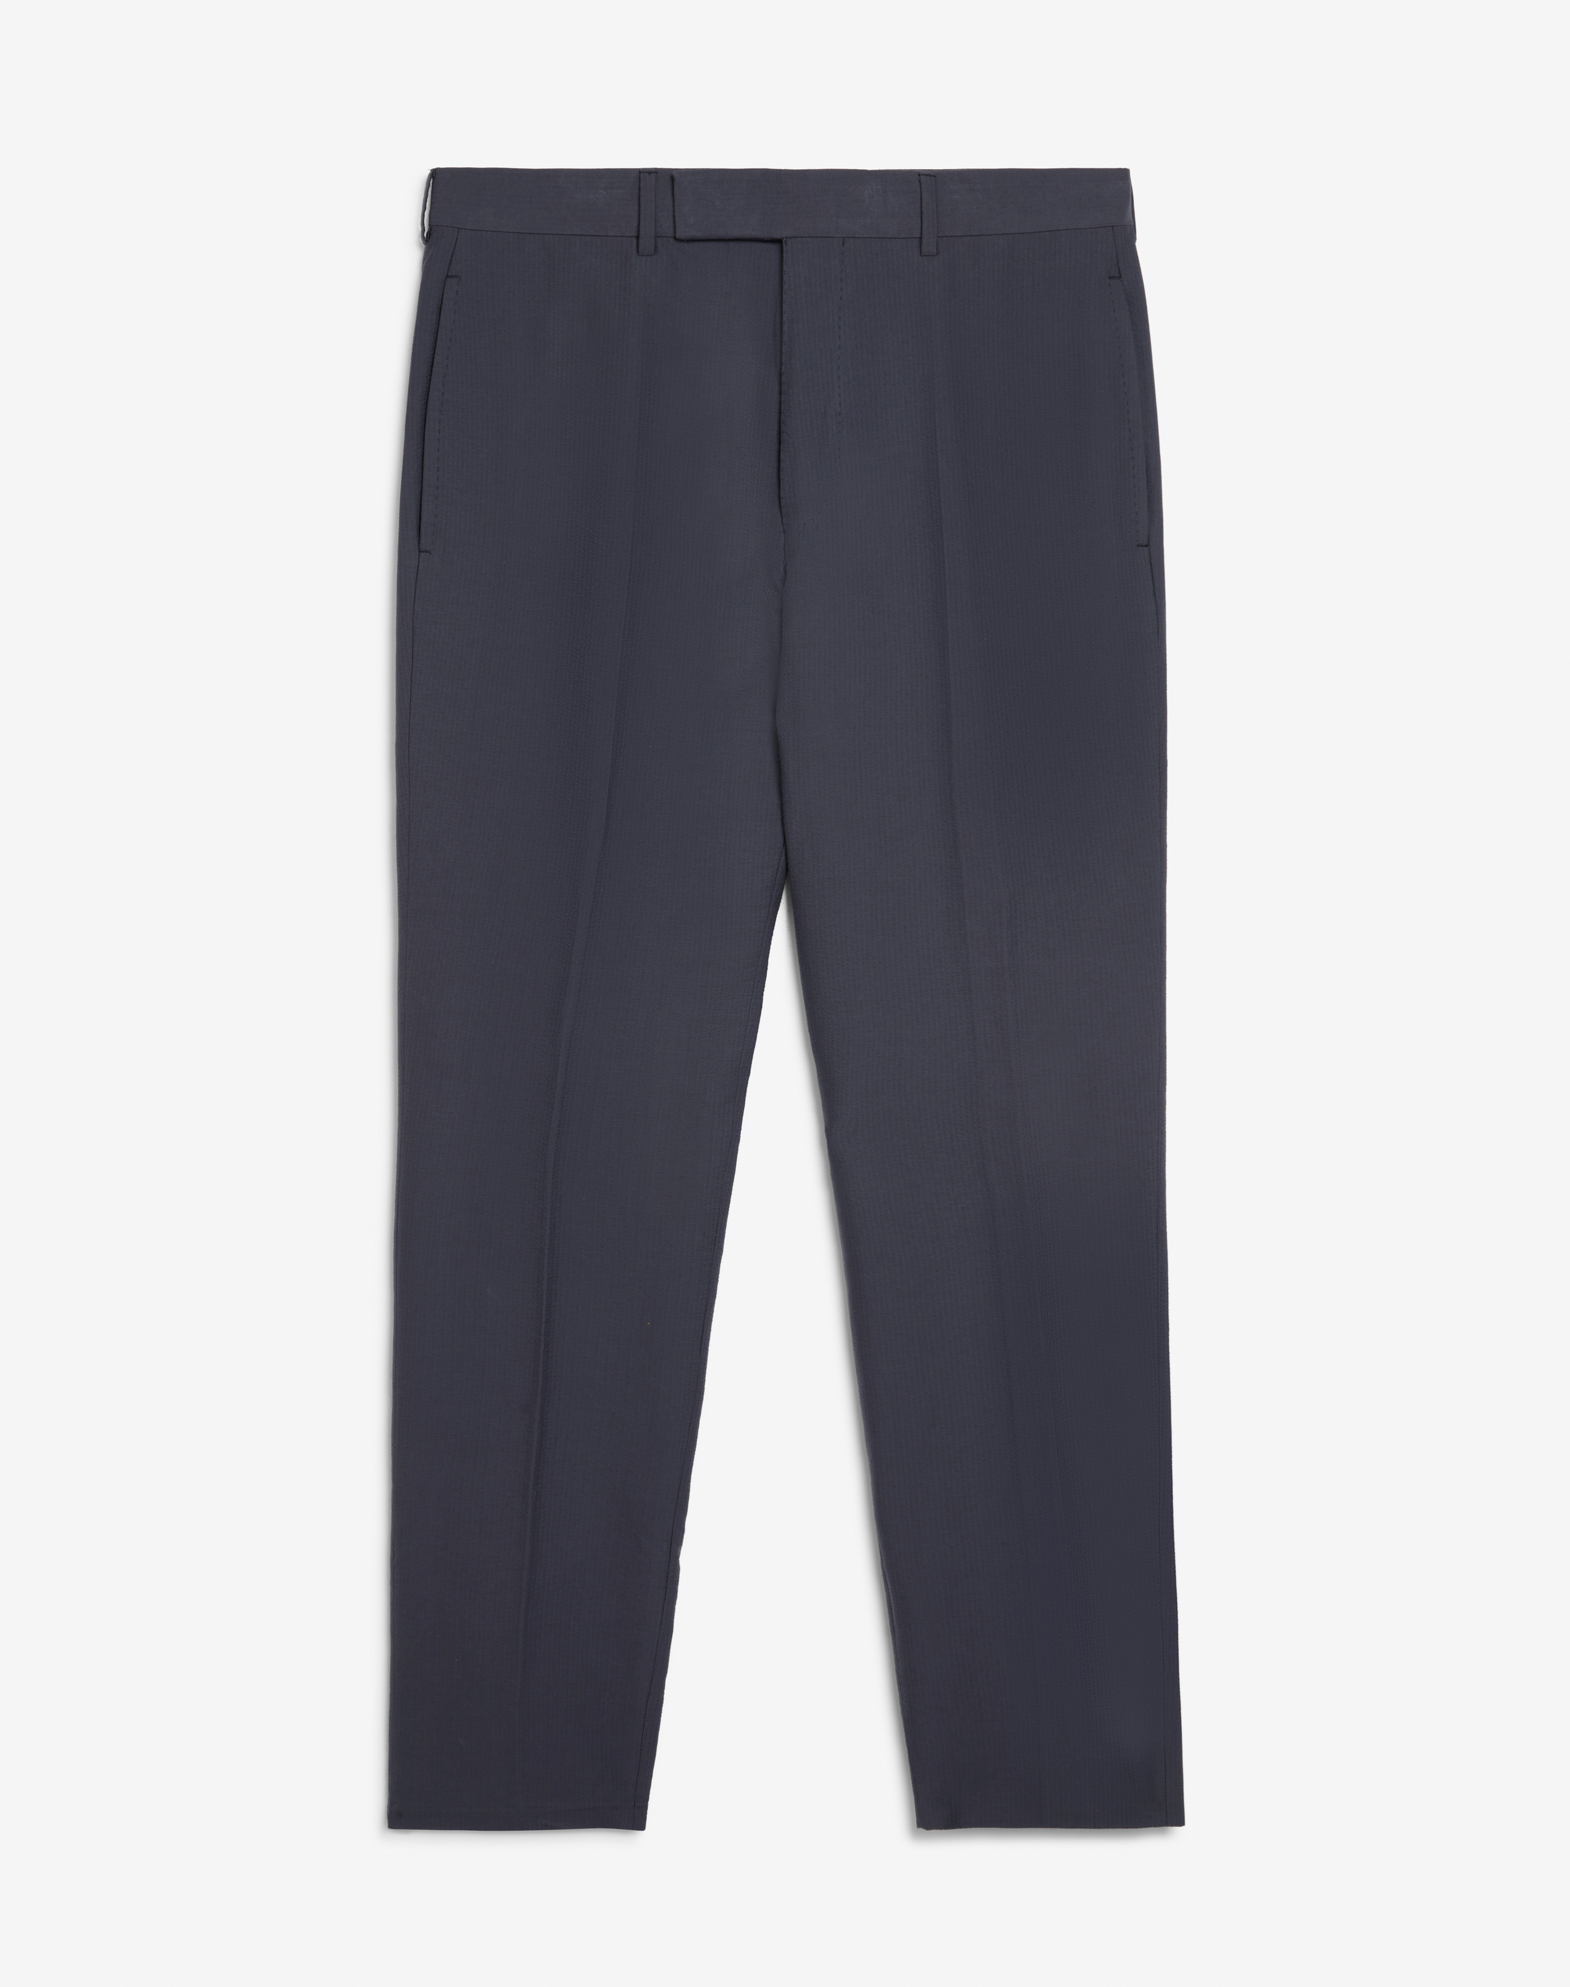 Dunhill Seersucker Mayfair Trousers In Grey